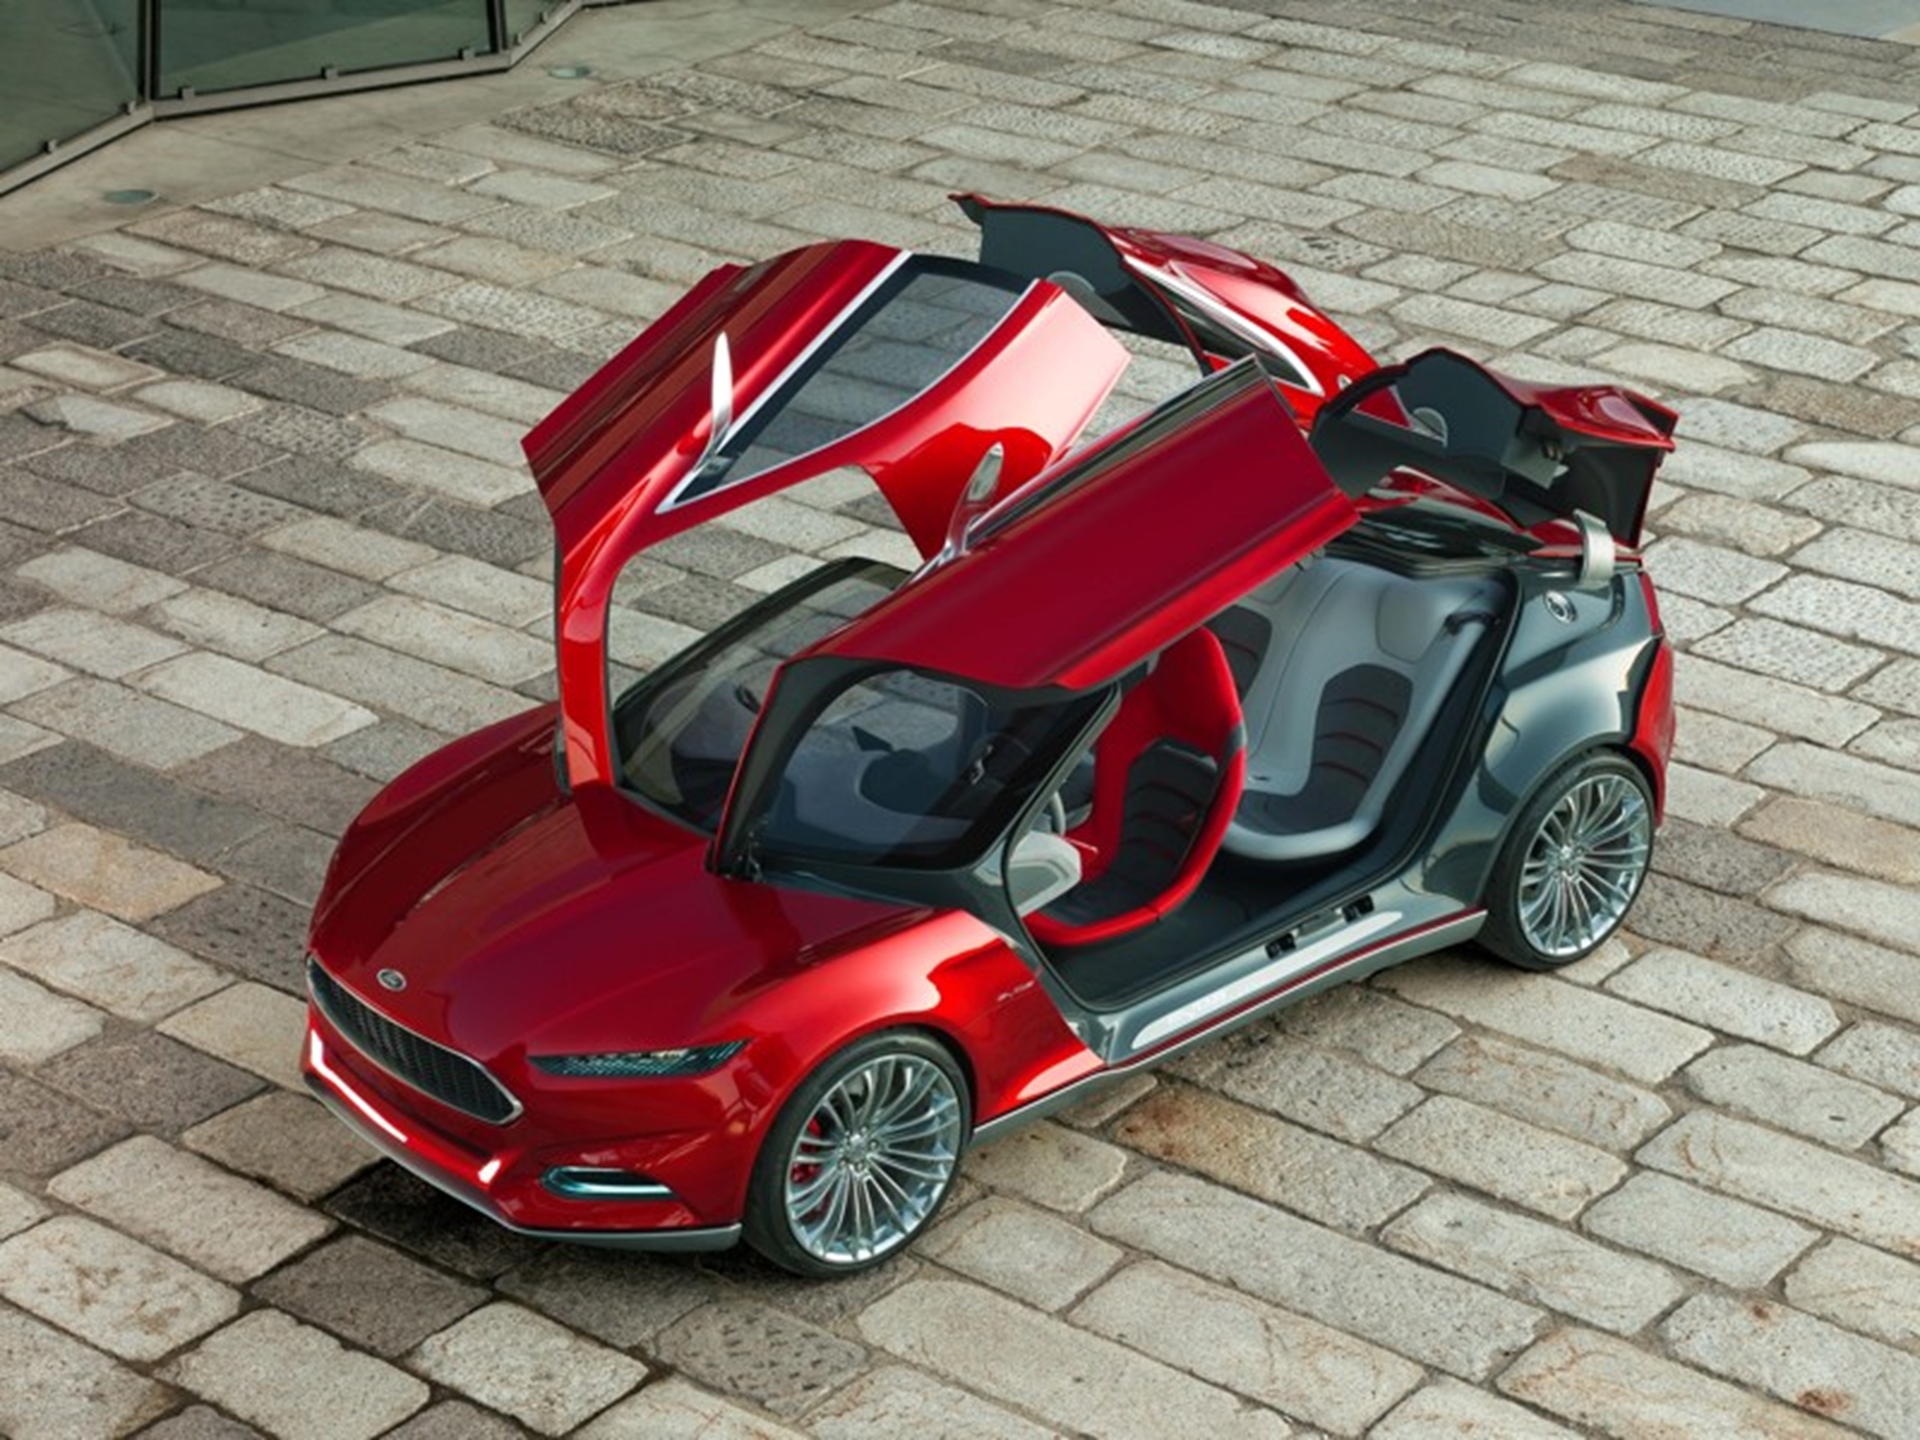 Ford Evos Concept makes global debut at the 2011 Frankfurt Motor Show